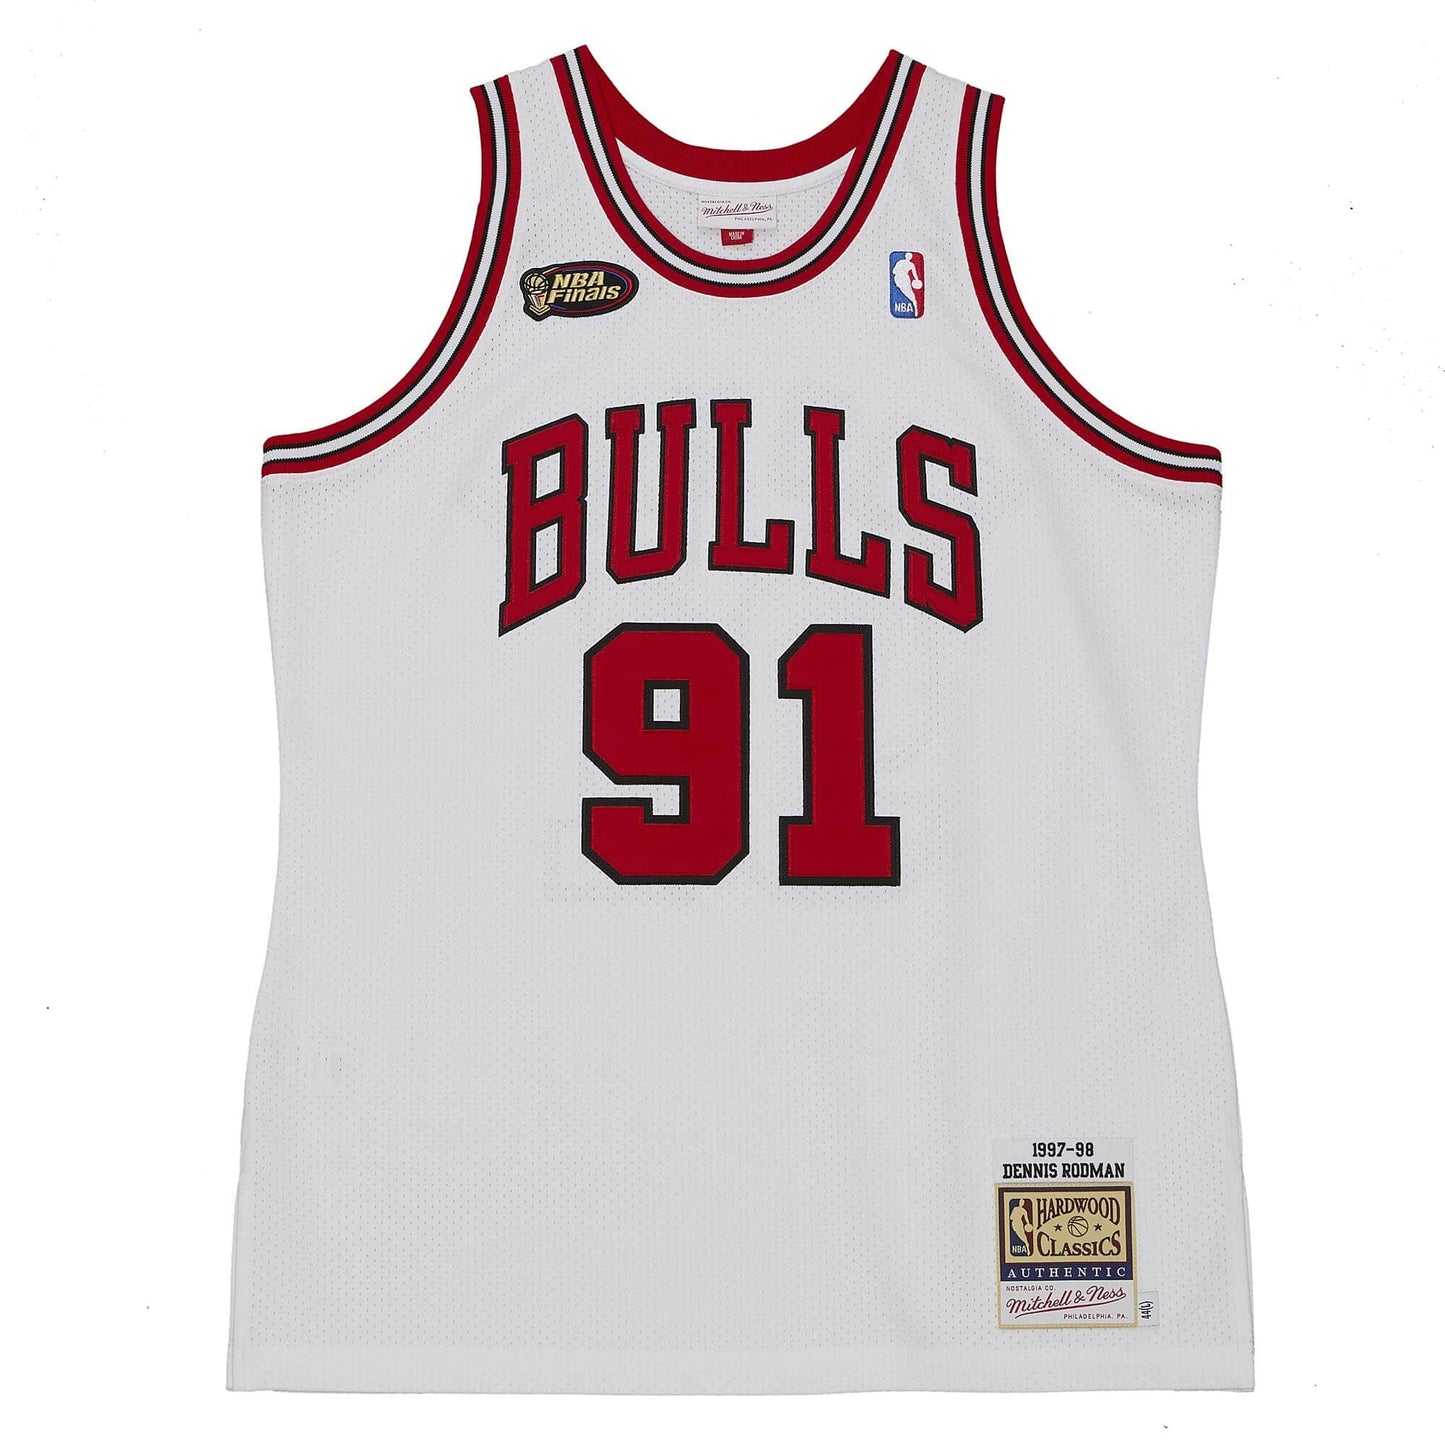 Authentic Jersey Chicago Bulls Finals 1997-98 Dennis Rodman